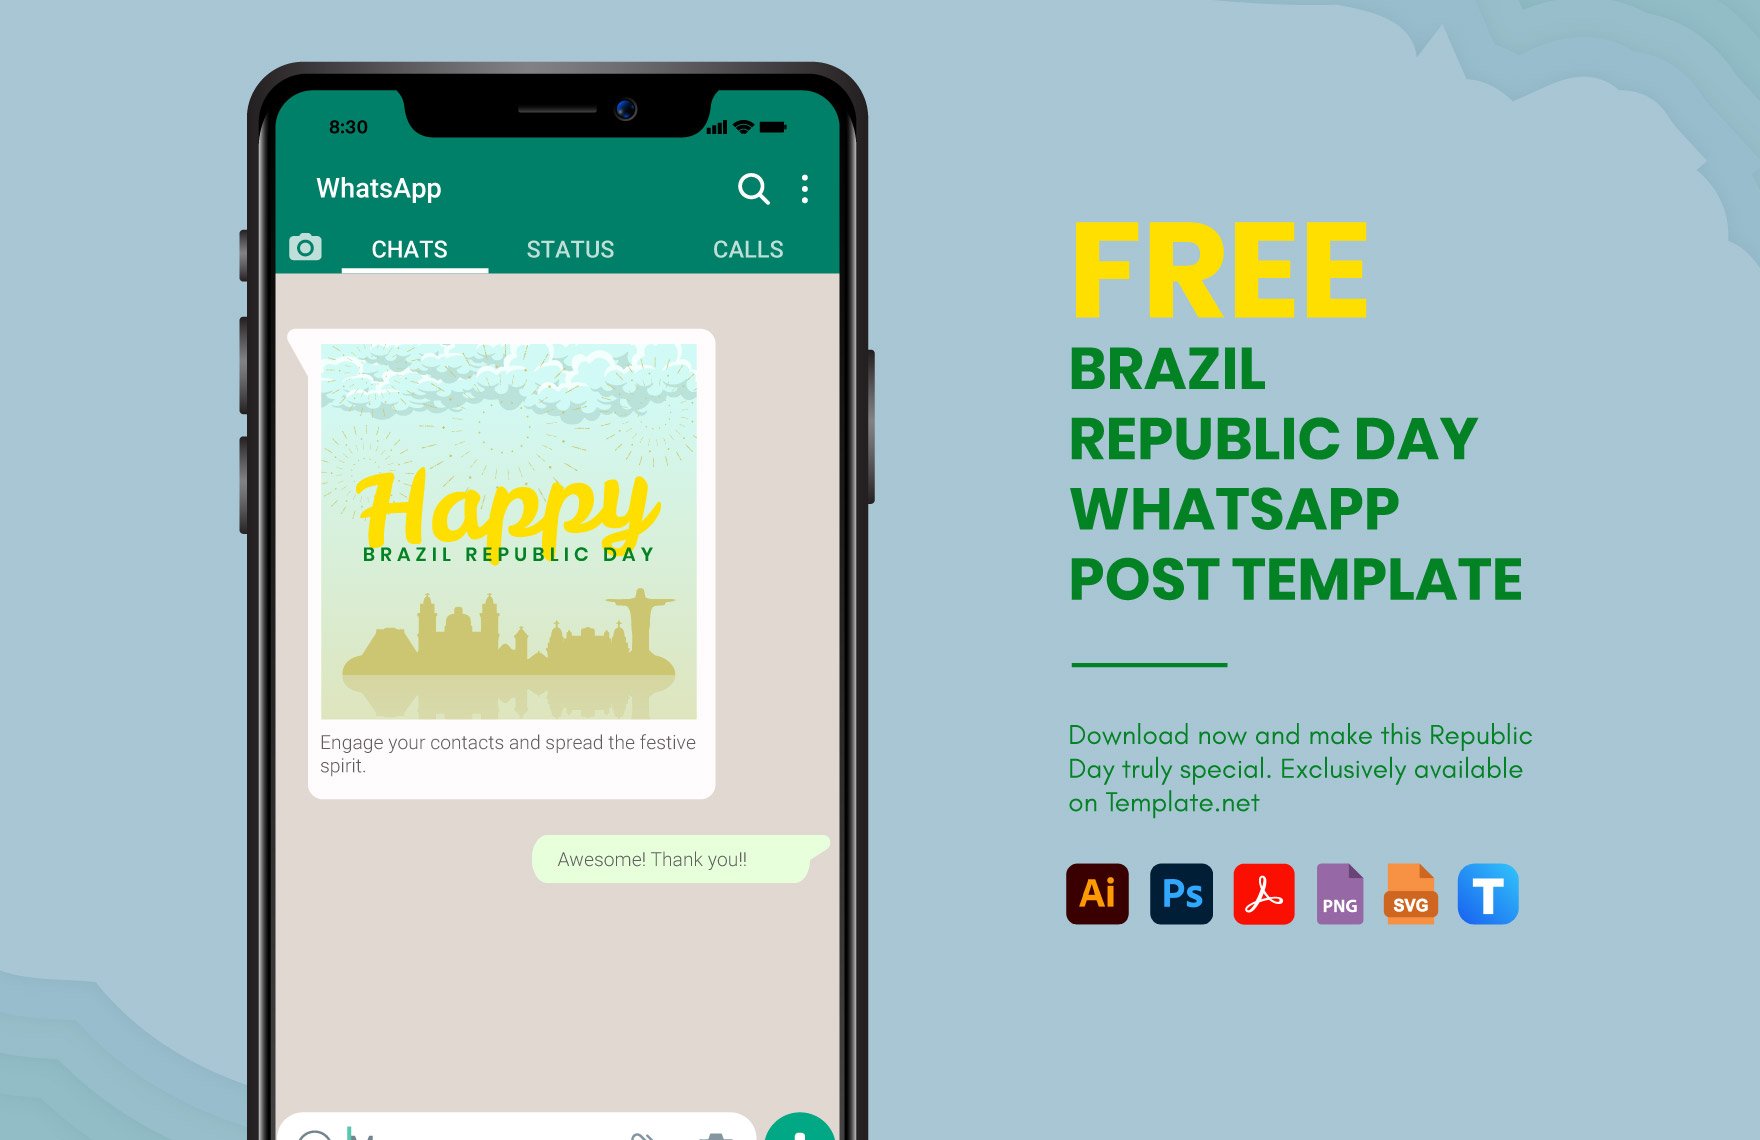 Free Brazil Republic Day WhatsApp Post Template in PDF, Illustrator, PSD, SVG, PNG